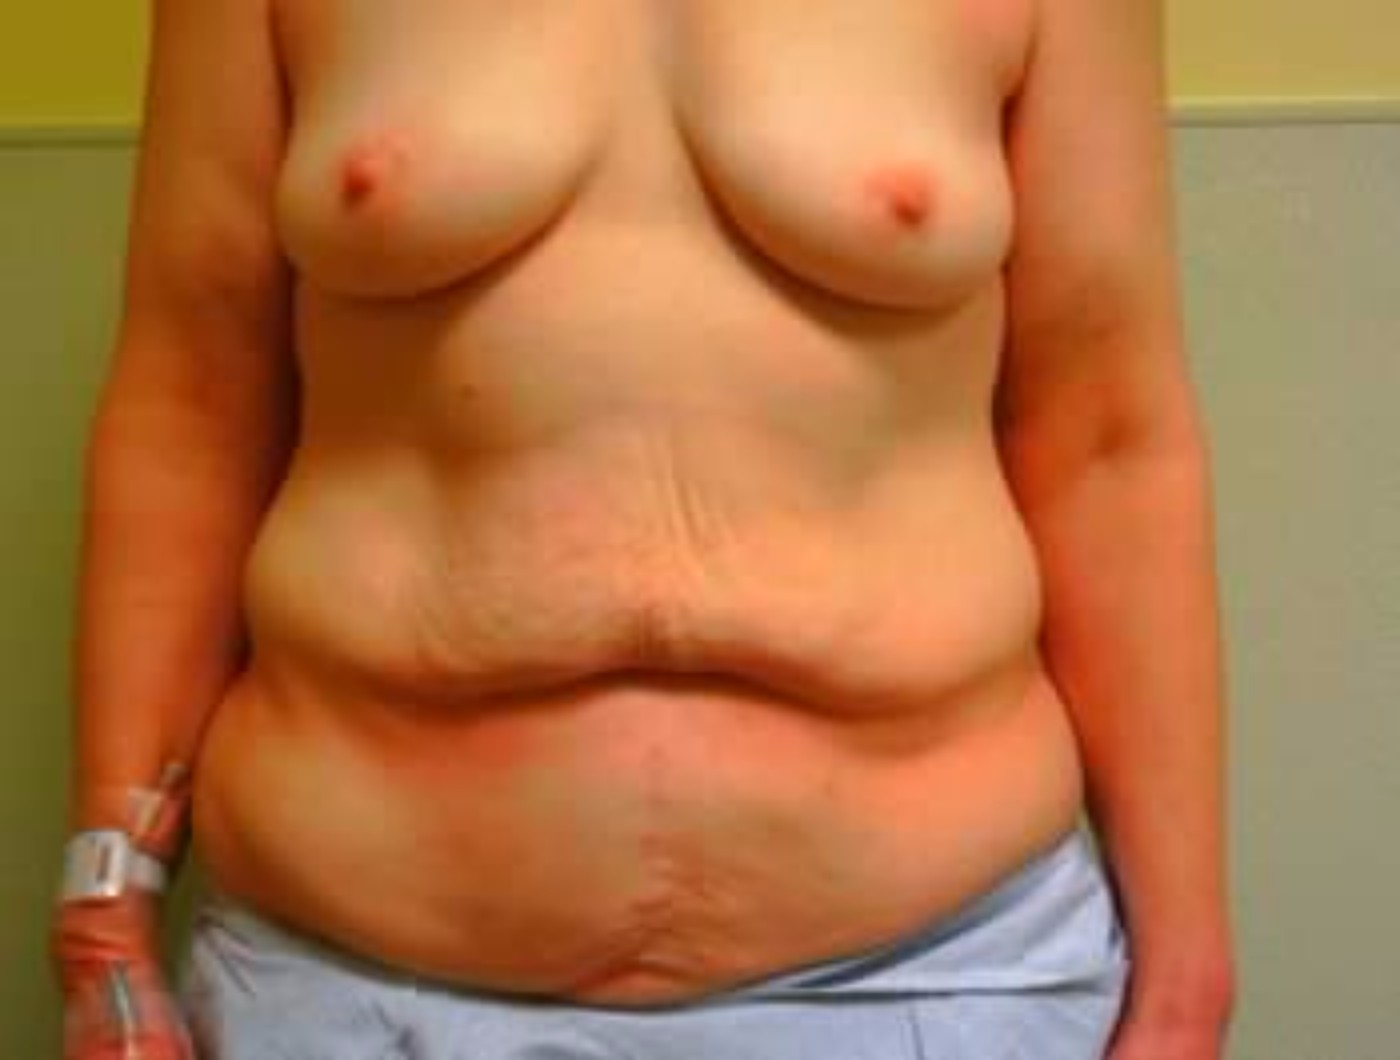 Breast Augmentation and Tummy Tuck